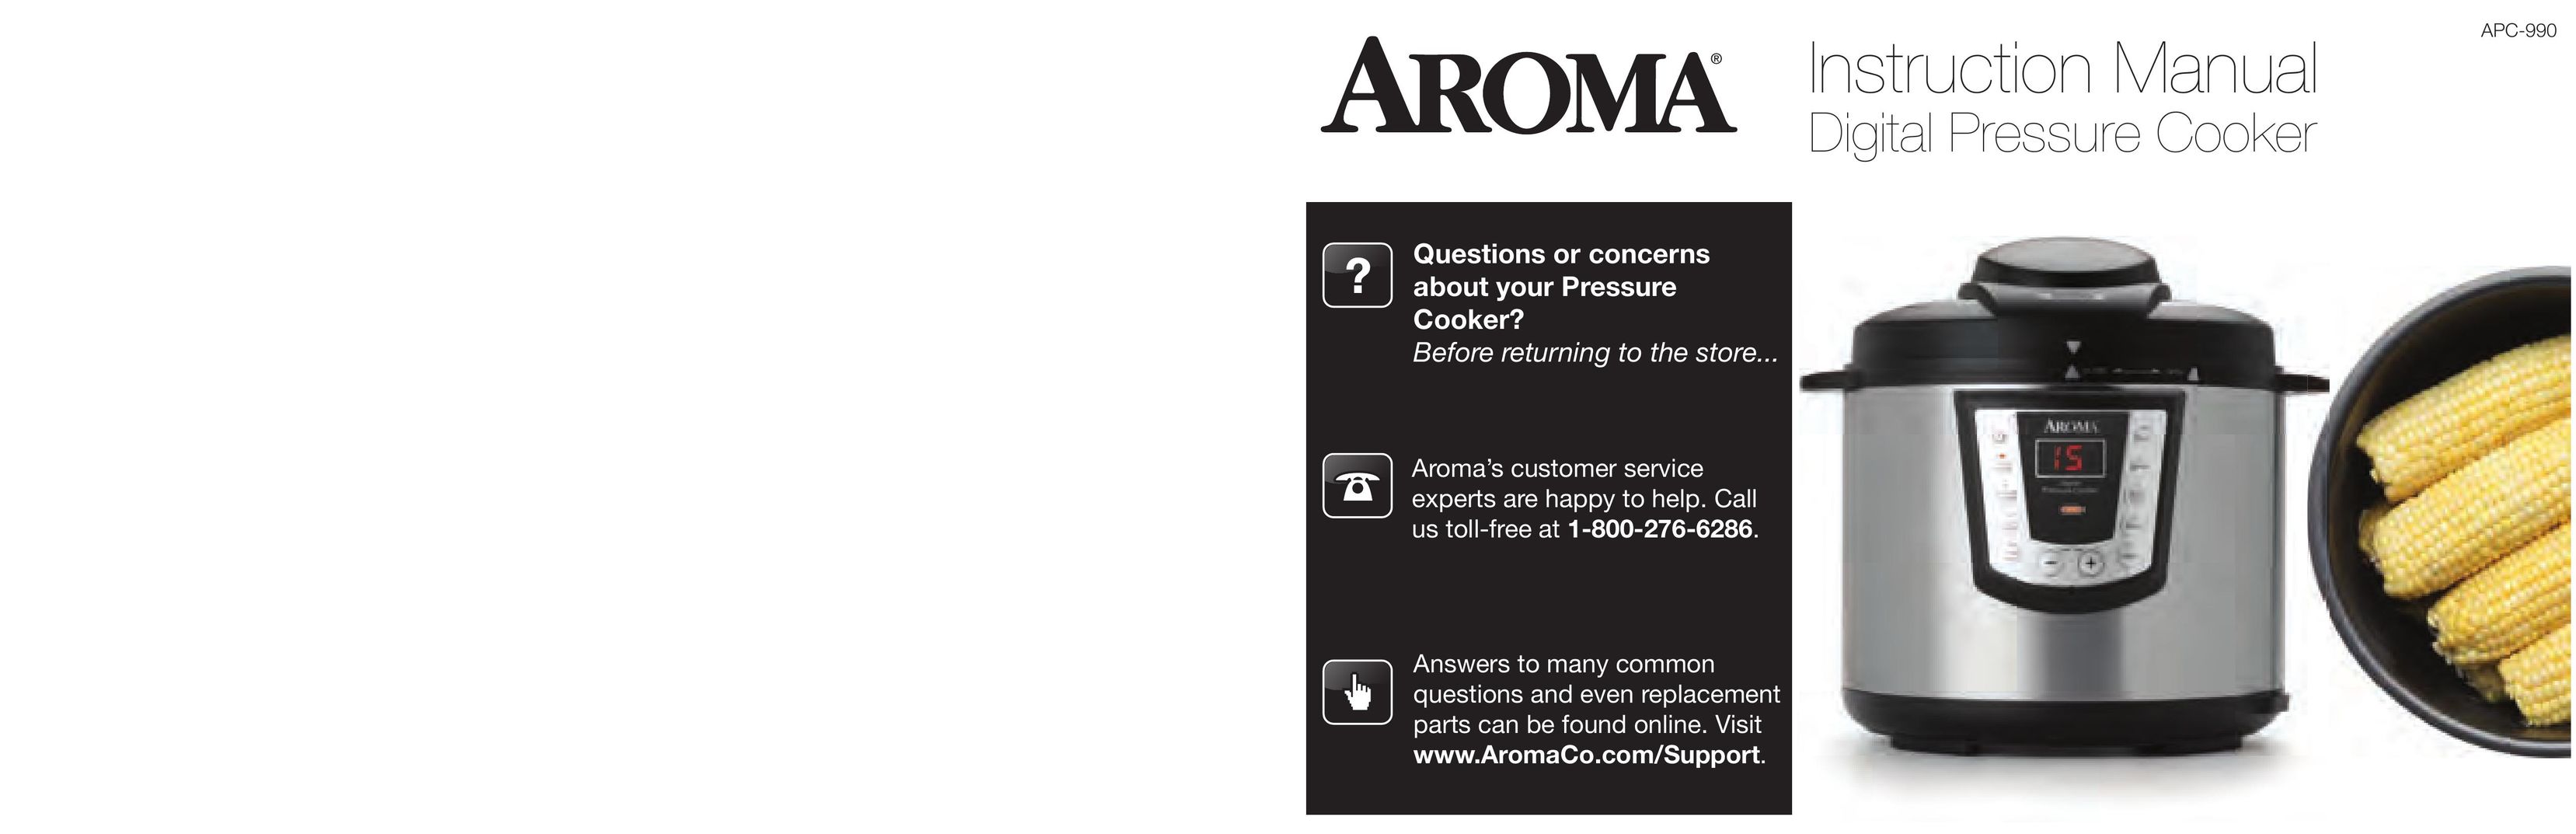 Aroma APC-990 Electric Pressure Cooker User Manual